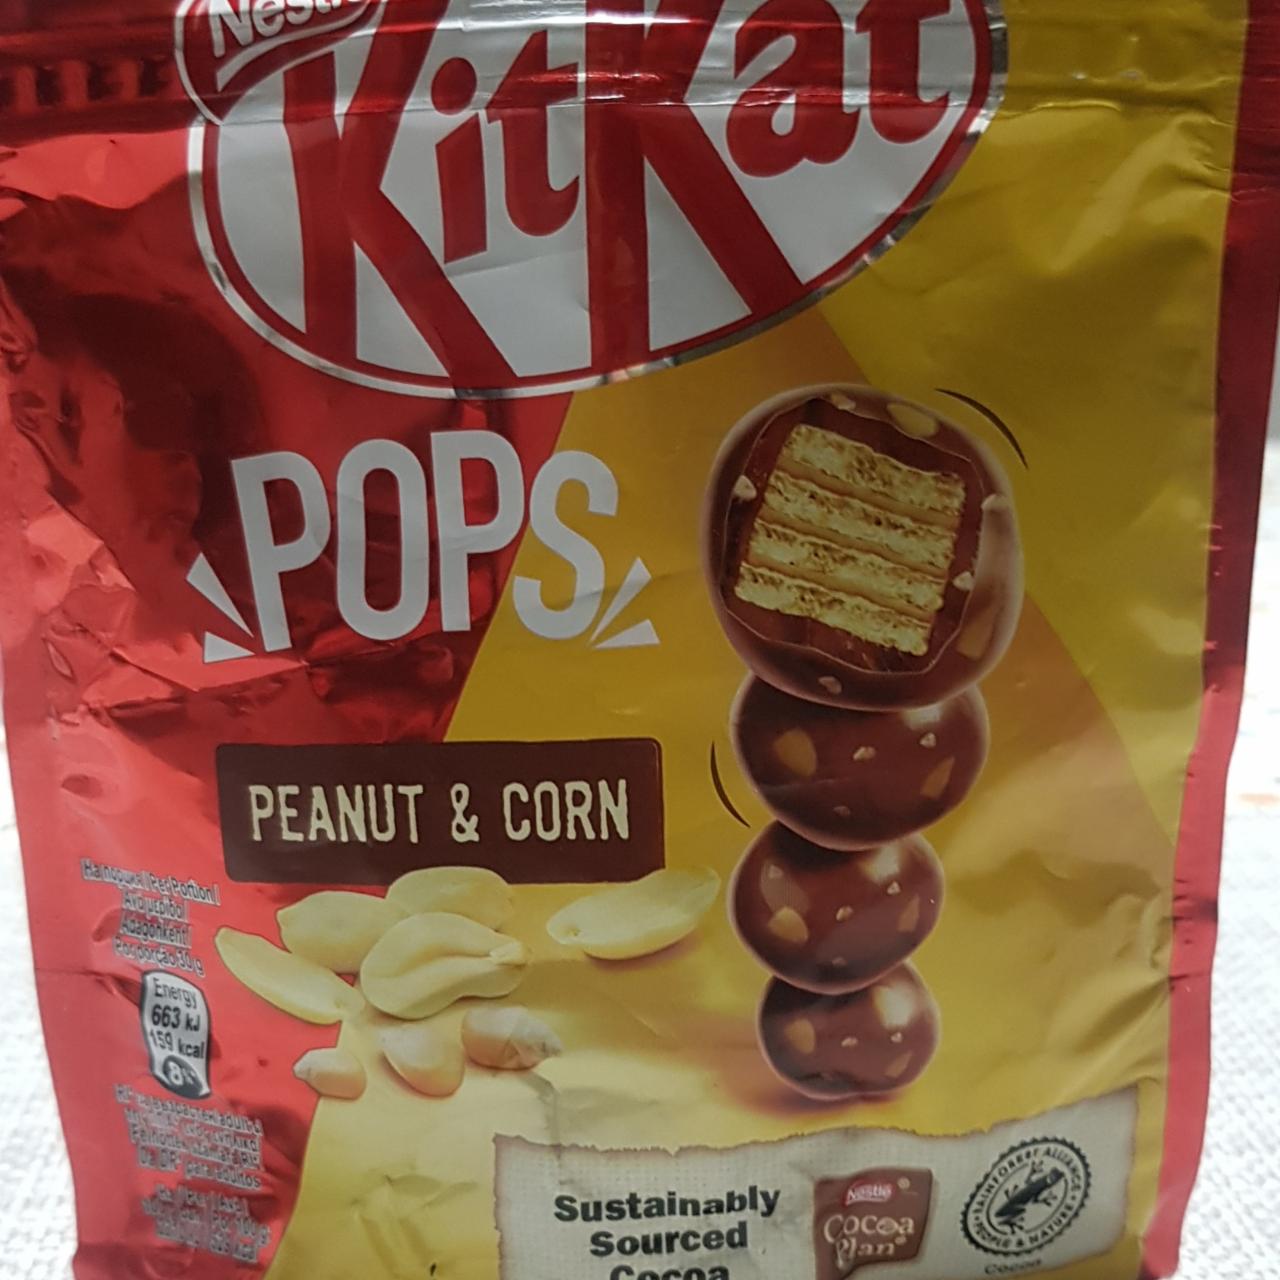 Fotografie - KitKat Pops Peanut & Corn Nestlé